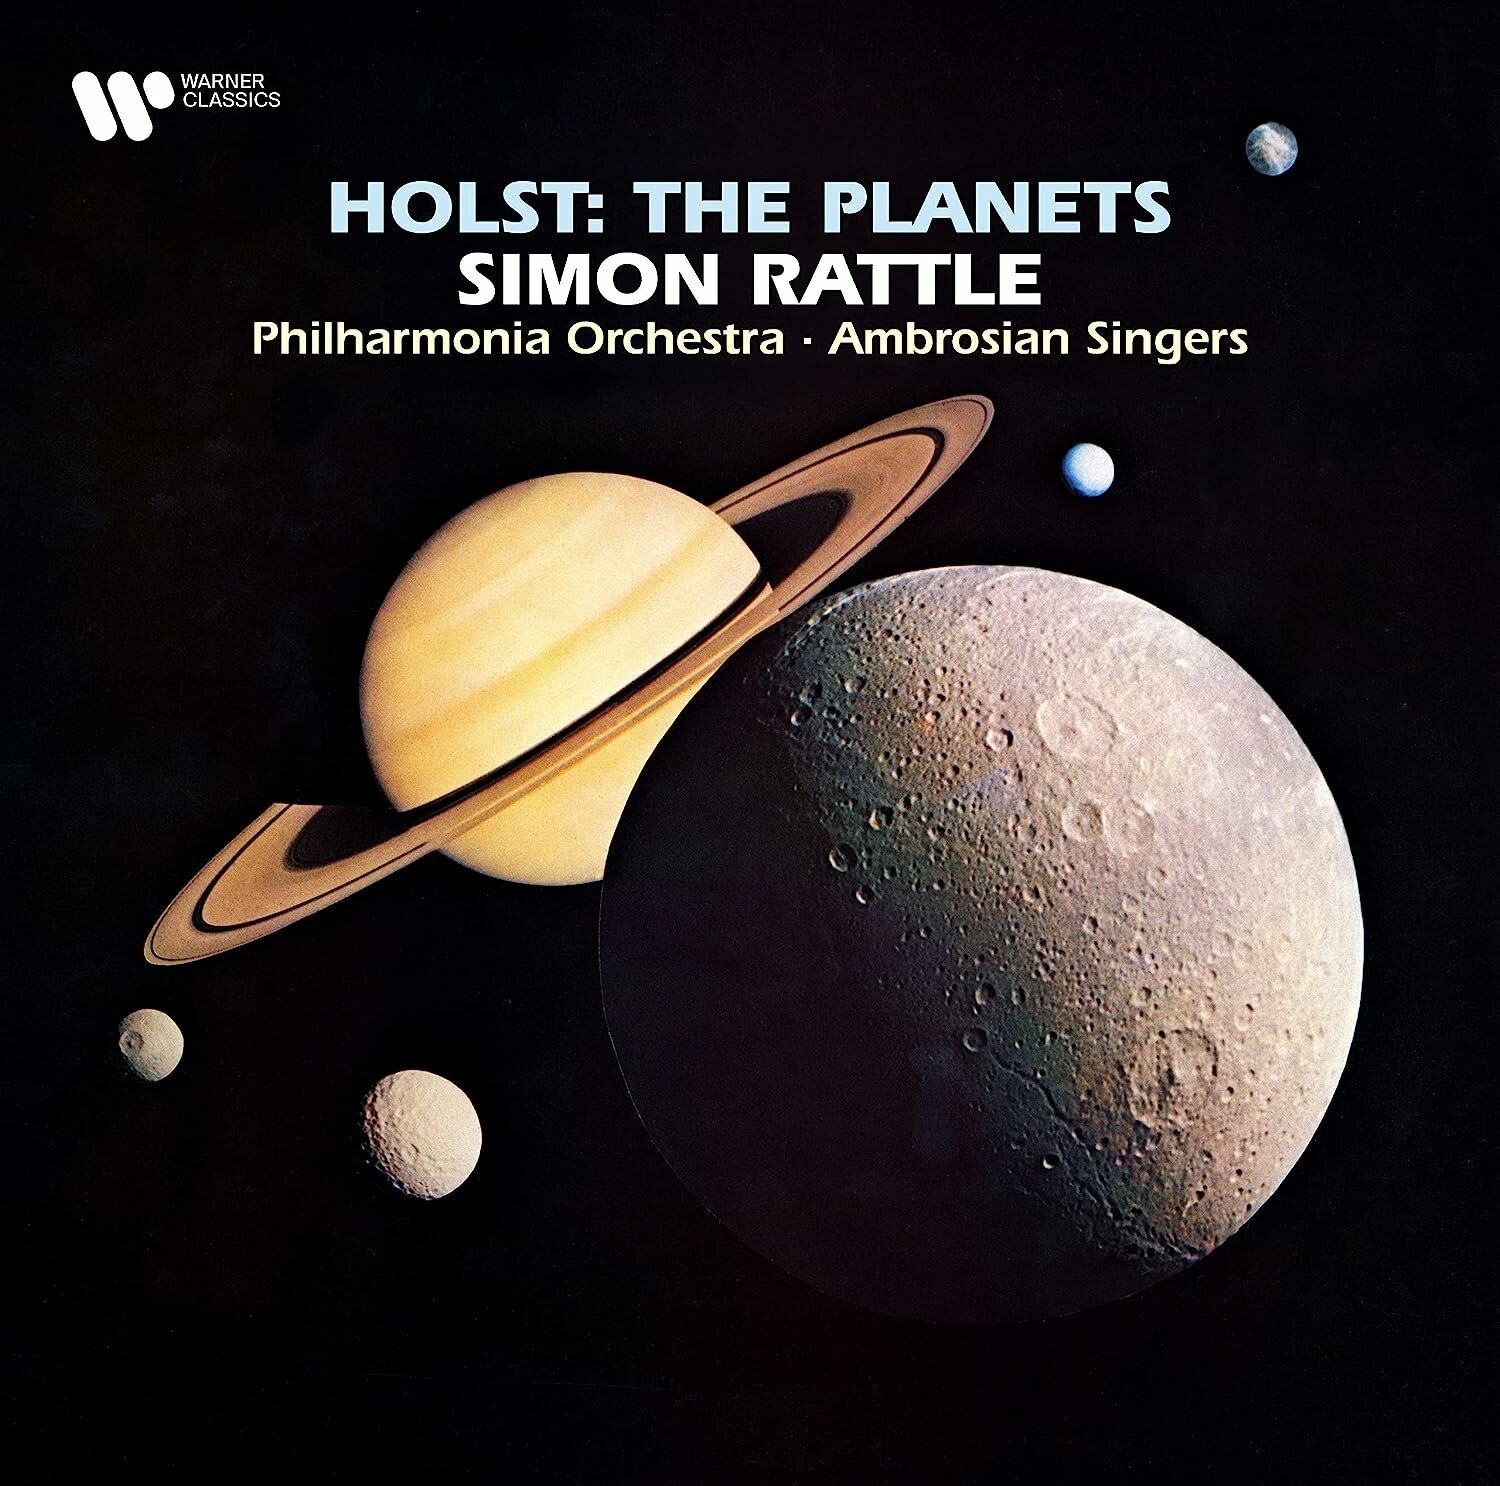 5054197490026, Виниловая пластинка Rattle, Simon, Holst: The Planets nels cline singers виниловая пластинка nels cline singers share the wealth